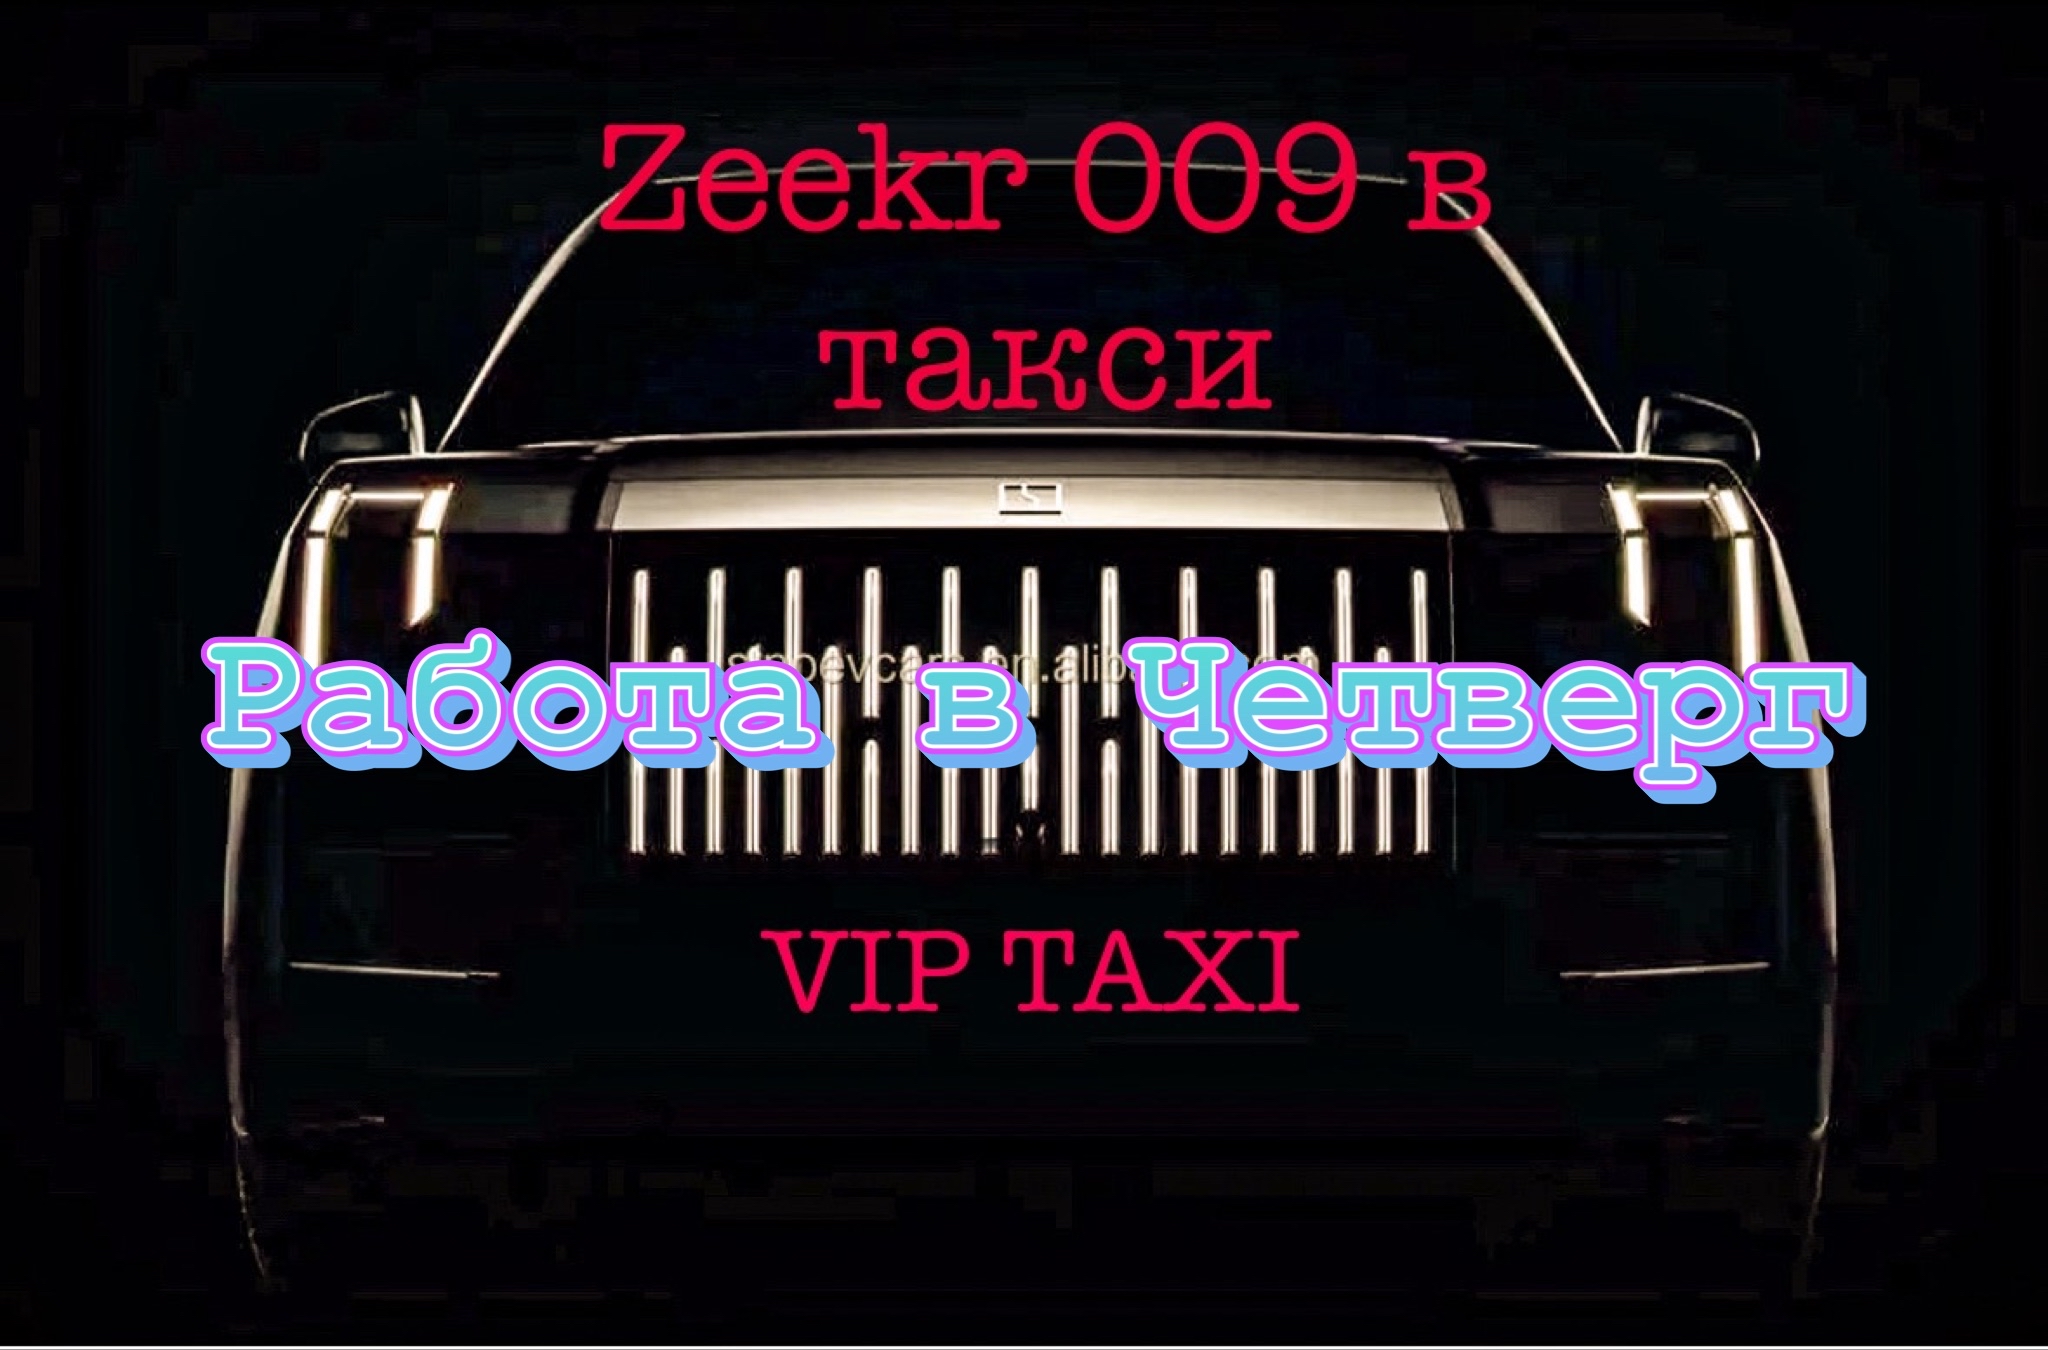 Четверг vip такси /таксую на zeekr009/elite taxi/тариф элит/рабочая смена